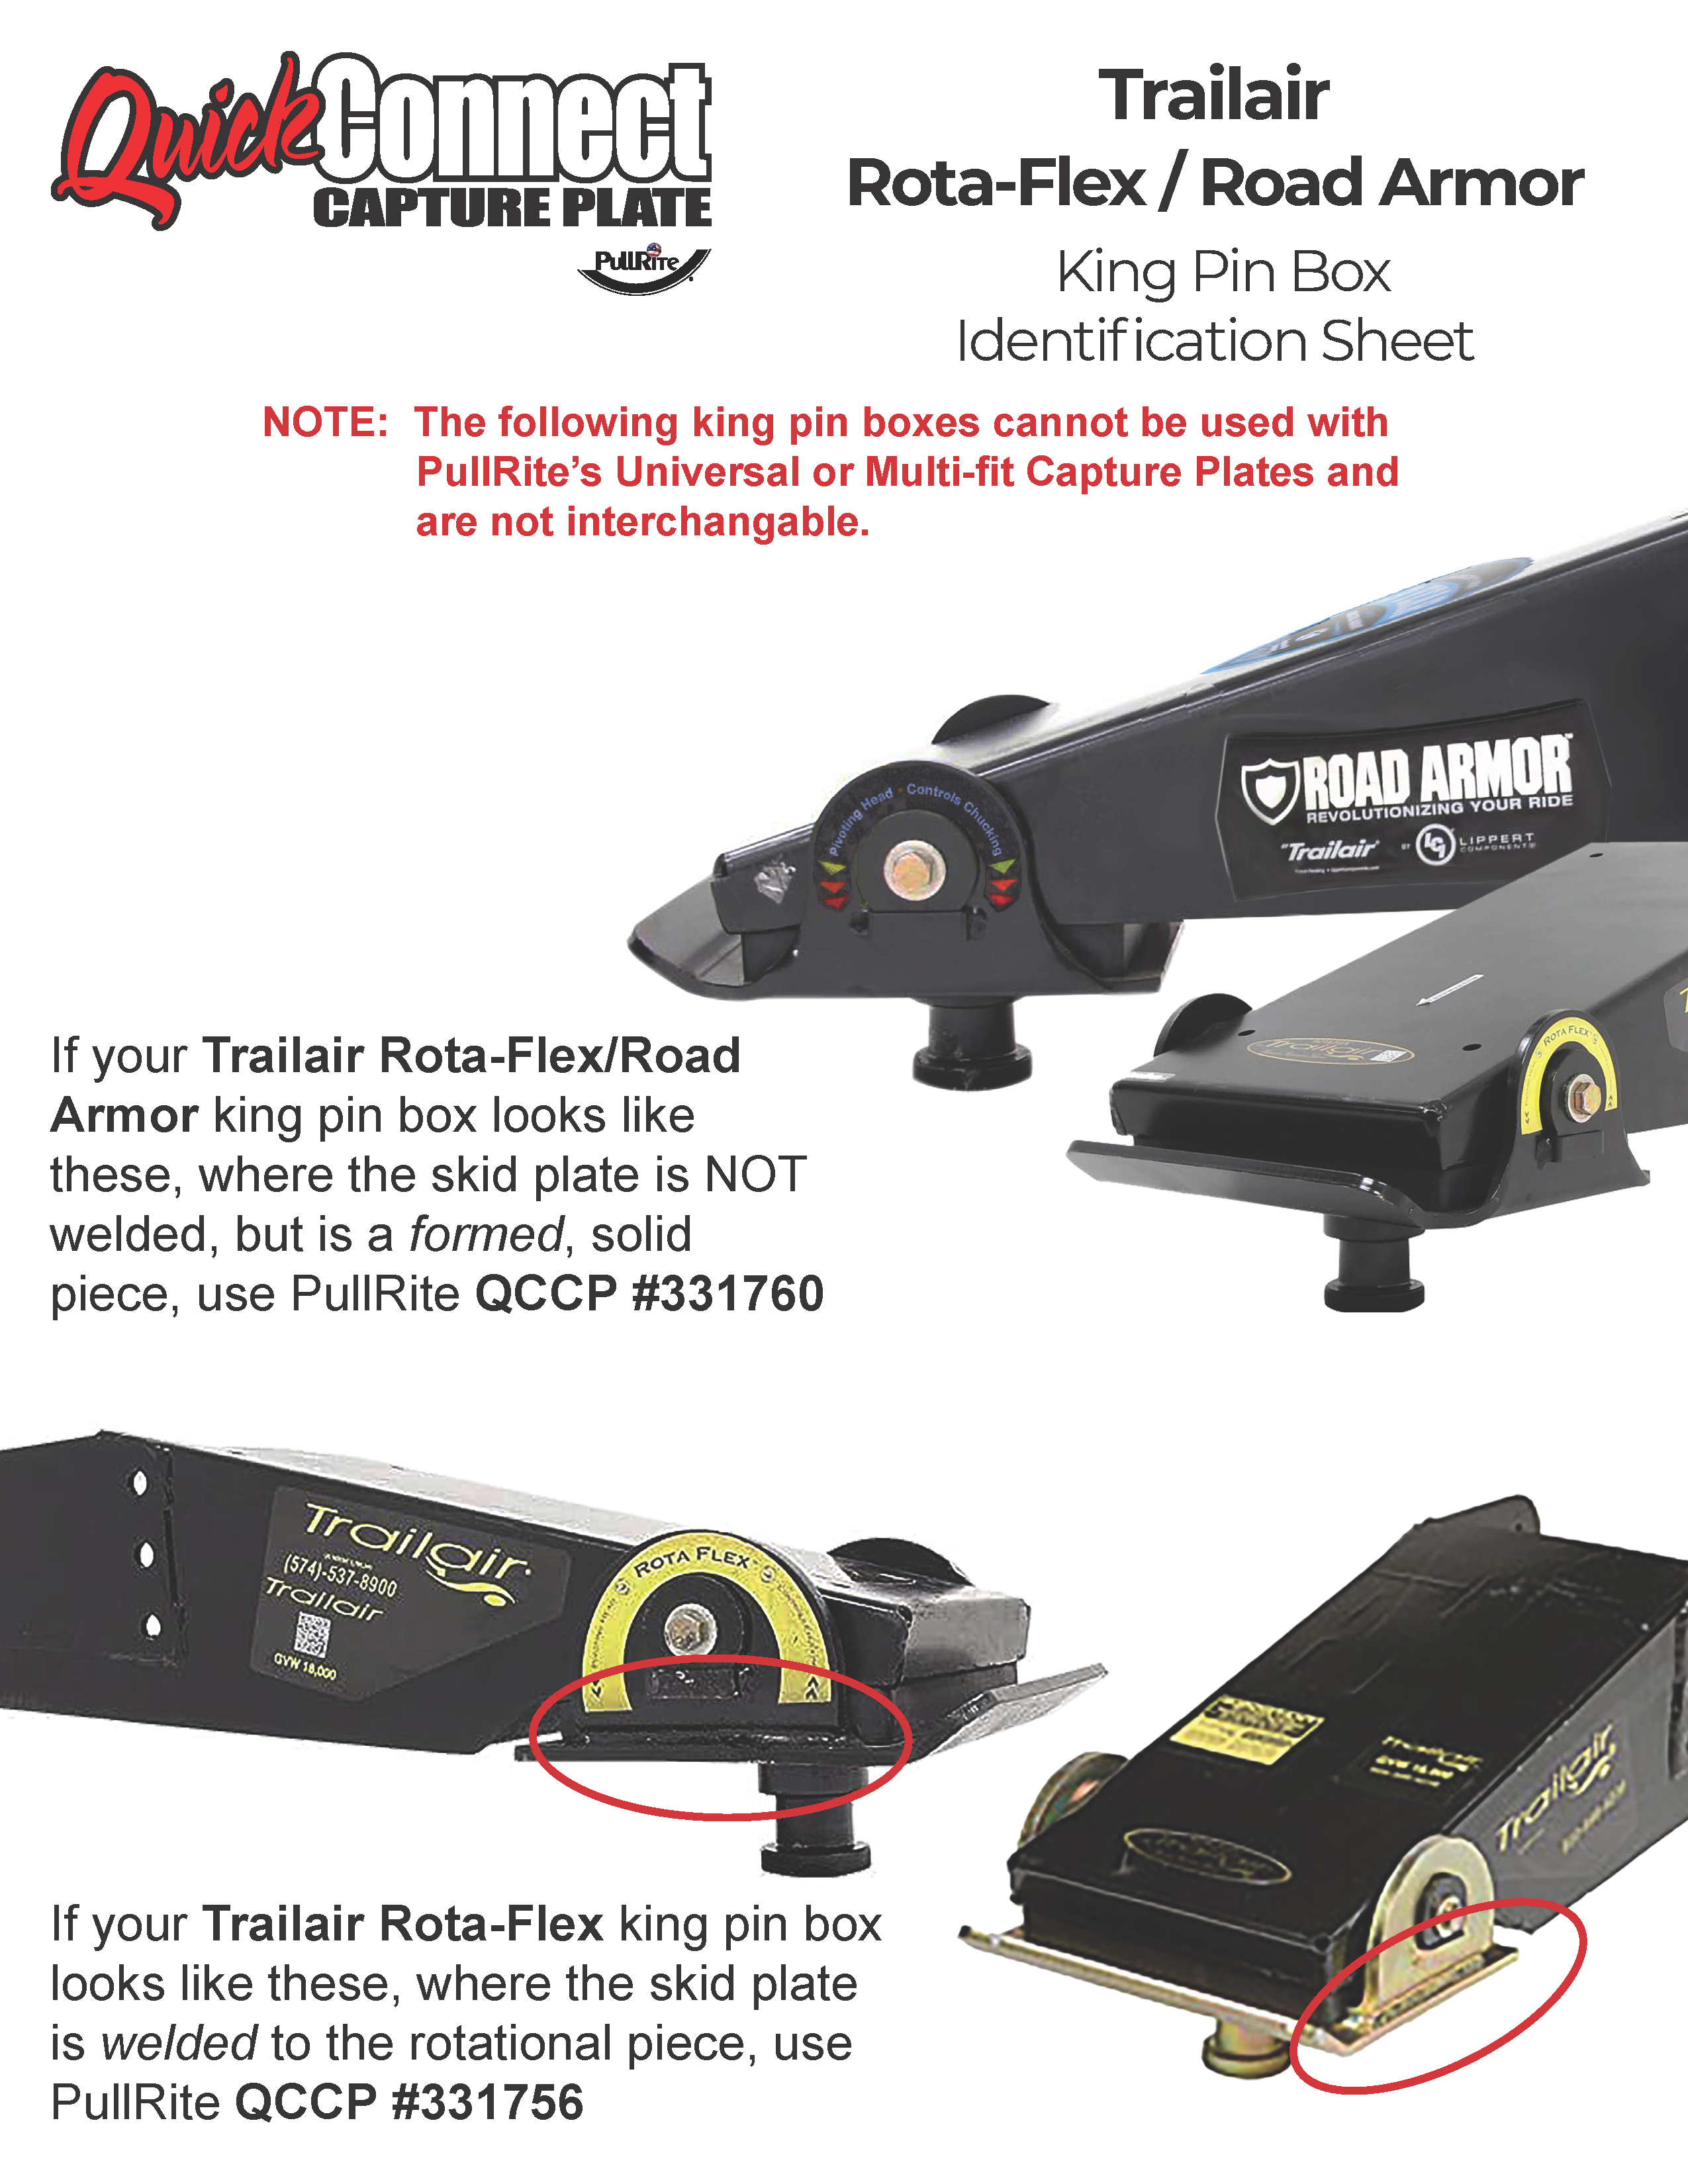 Trailair Rotoflex King PIn ID Sheet